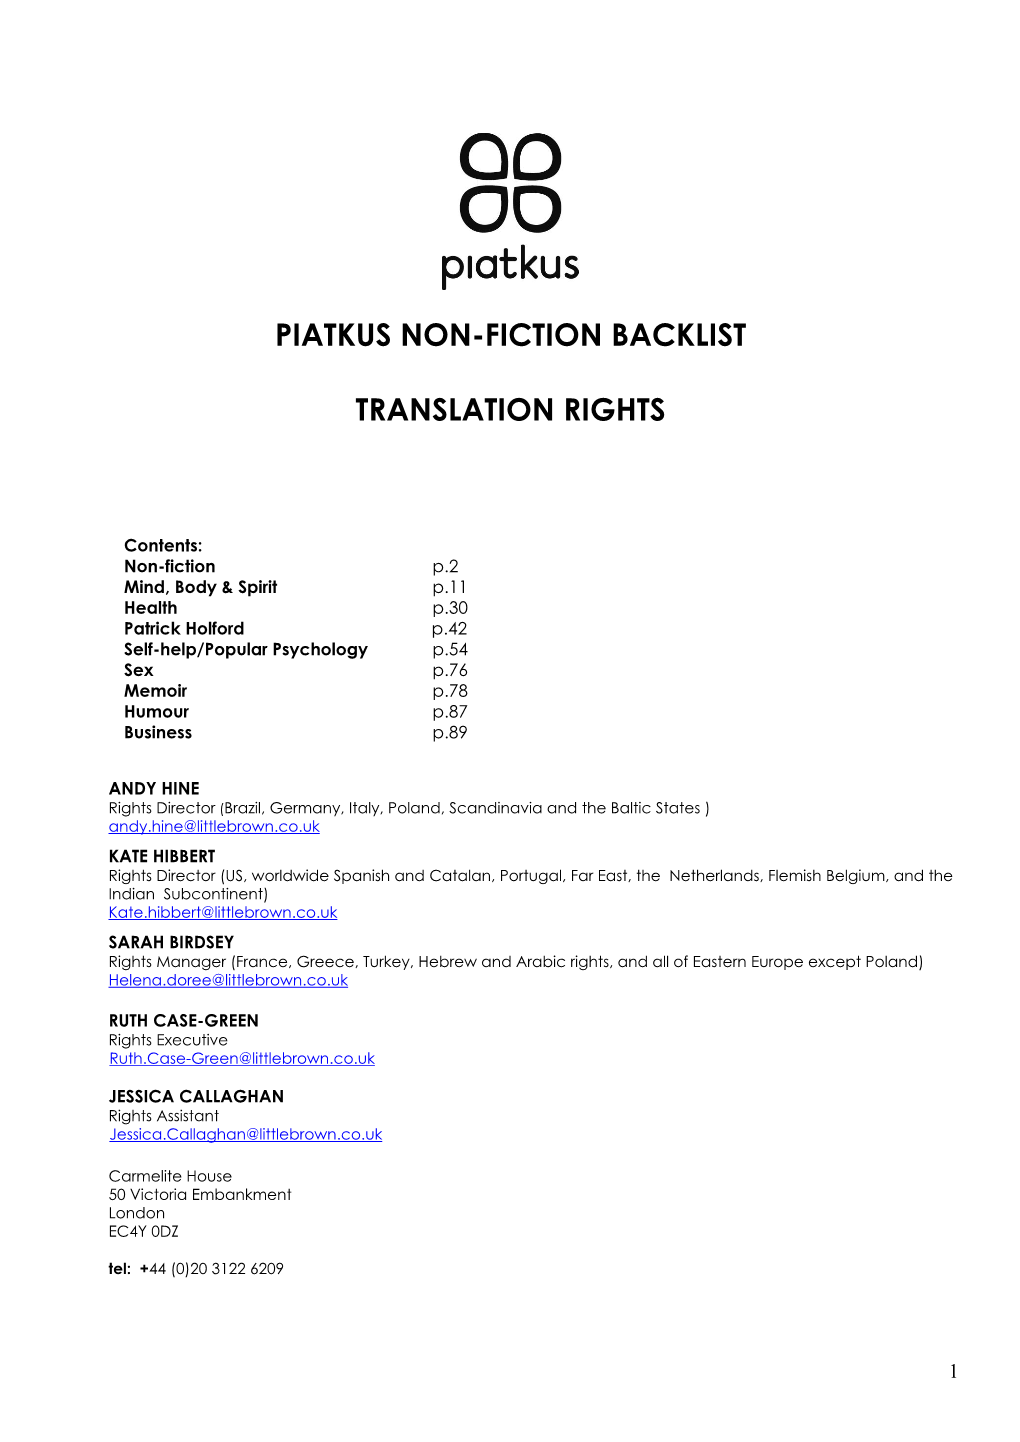 Piatkus Non-Fiction Backlist Translation Rights